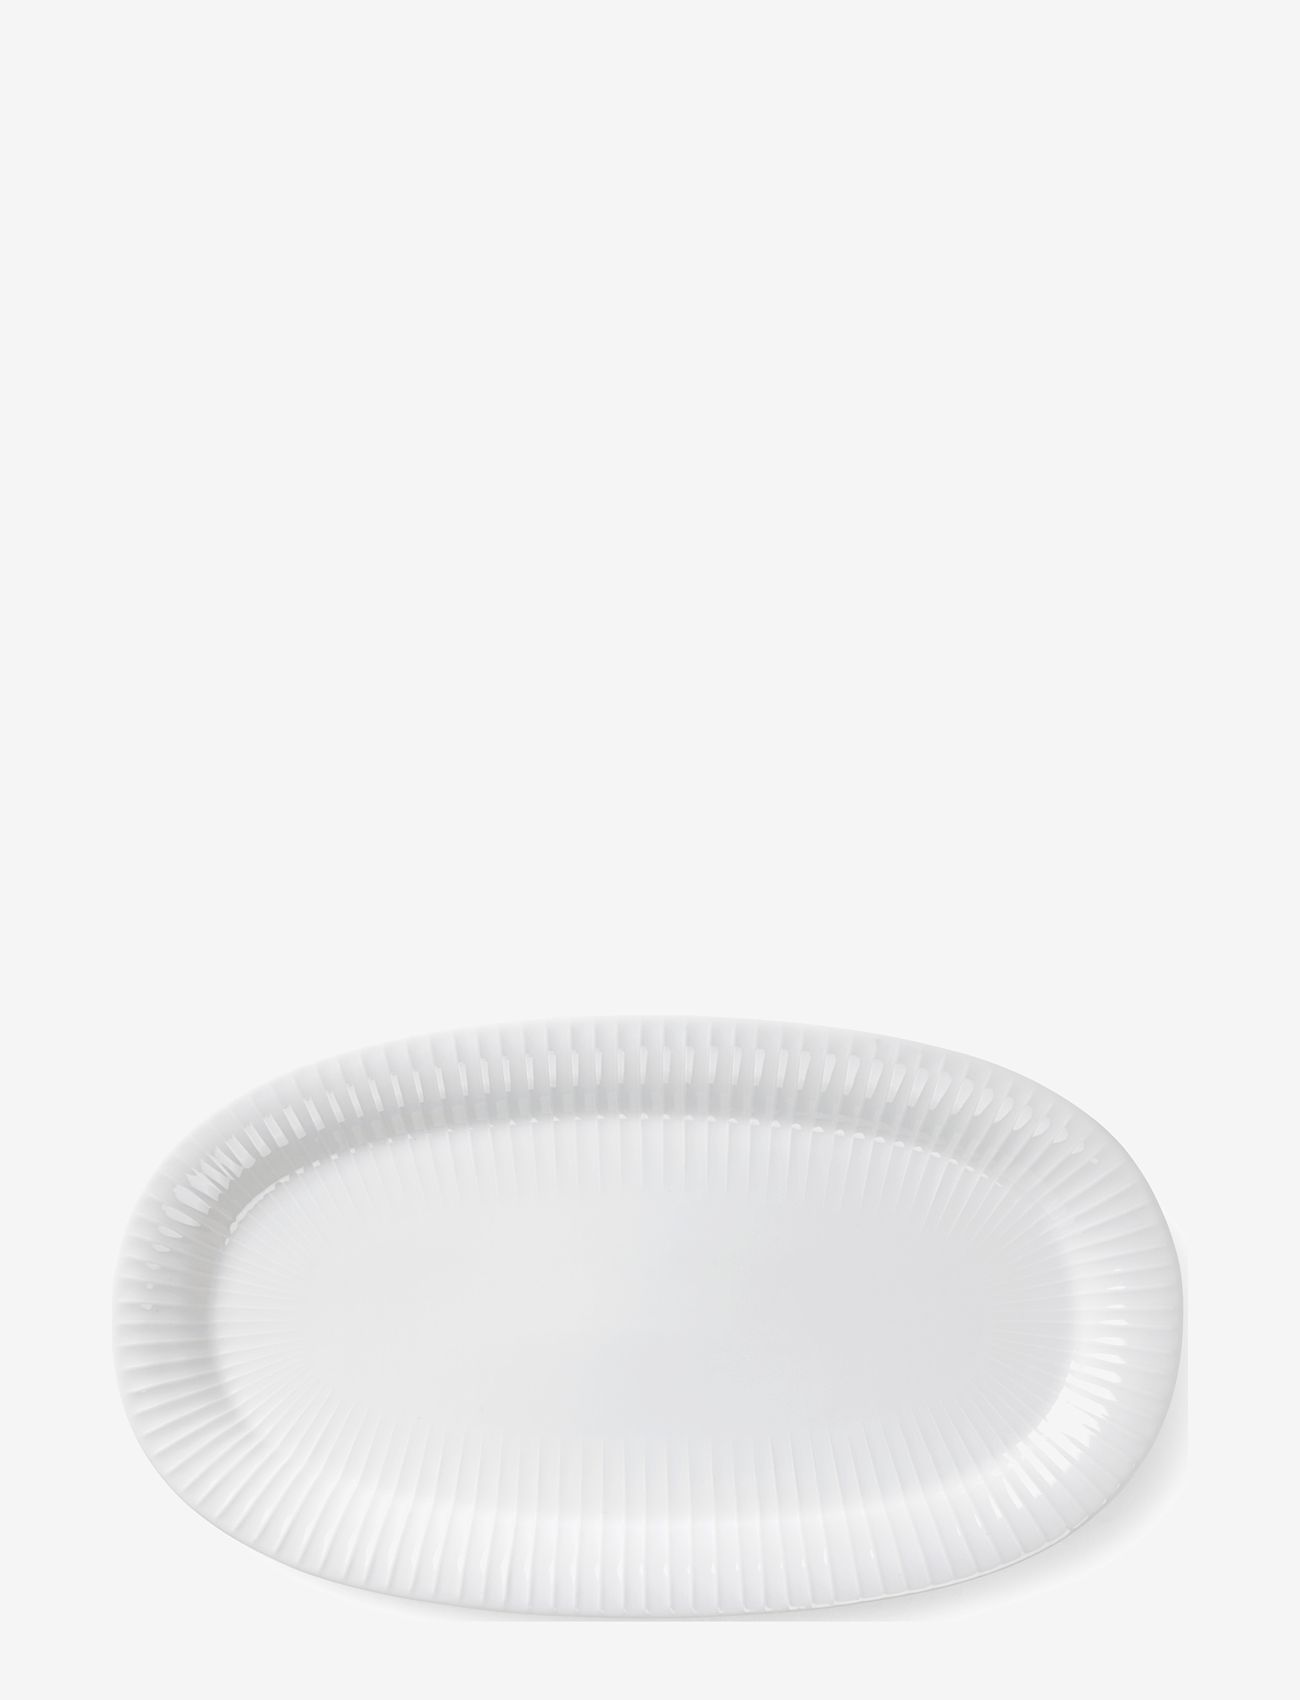 Kähler - Hammershøi Oval serving dish 40x22.5 white - serving platters - white - 1